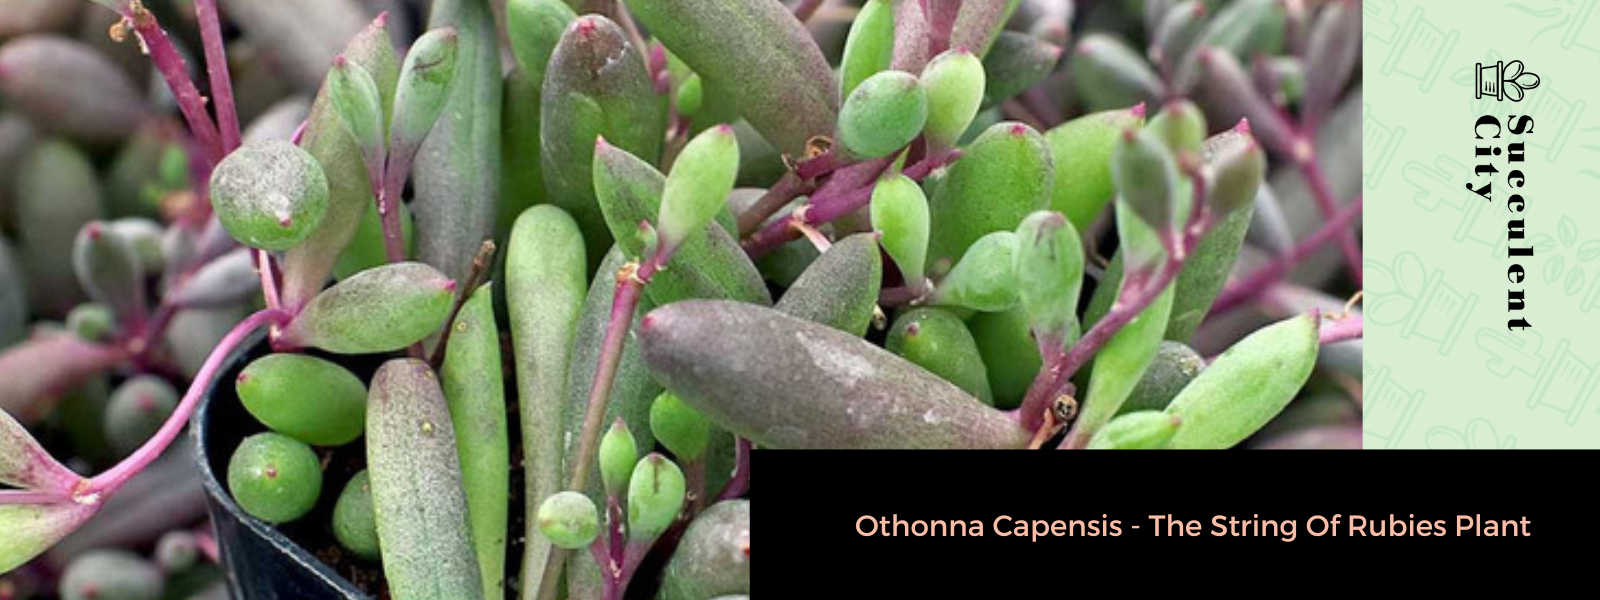 Othonna Capensis (La planta del cordón de rubí)